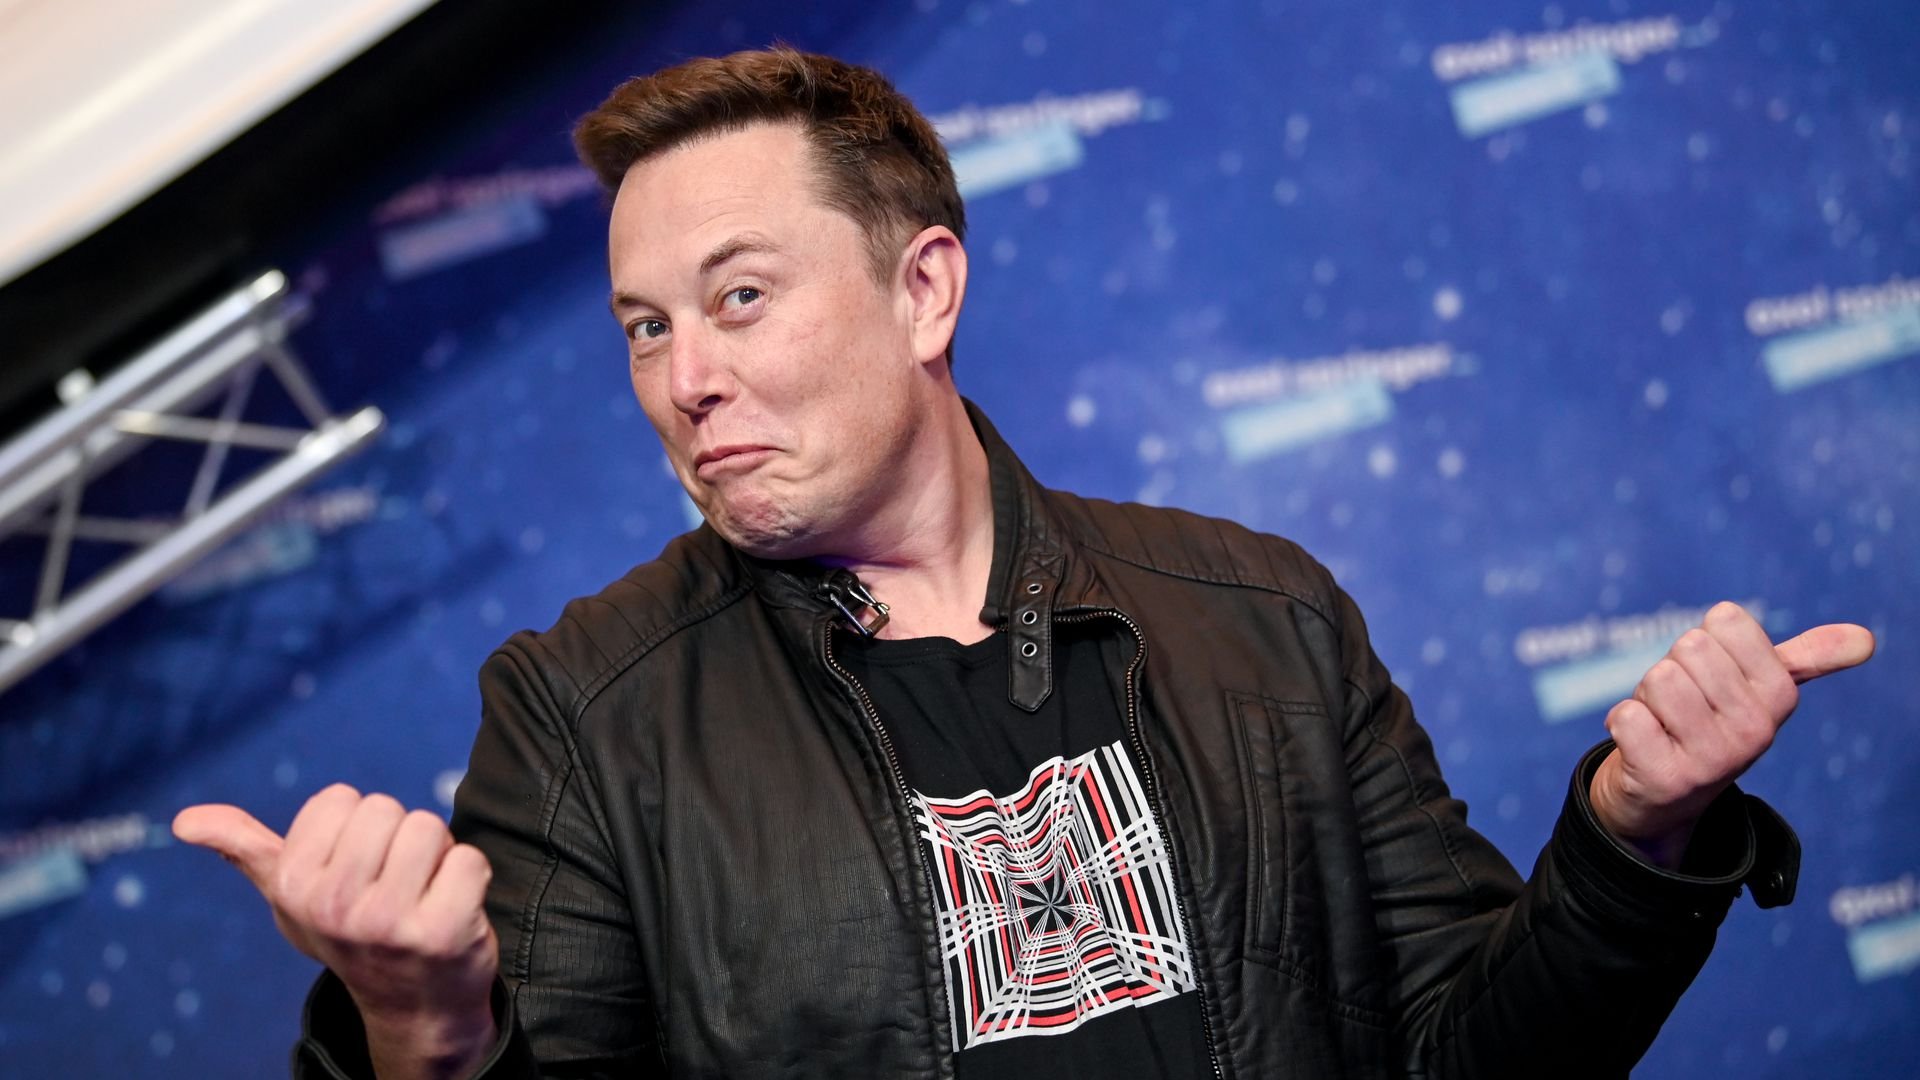 Key takeaways from Elon Musk's "Saturday Night Live" appearance